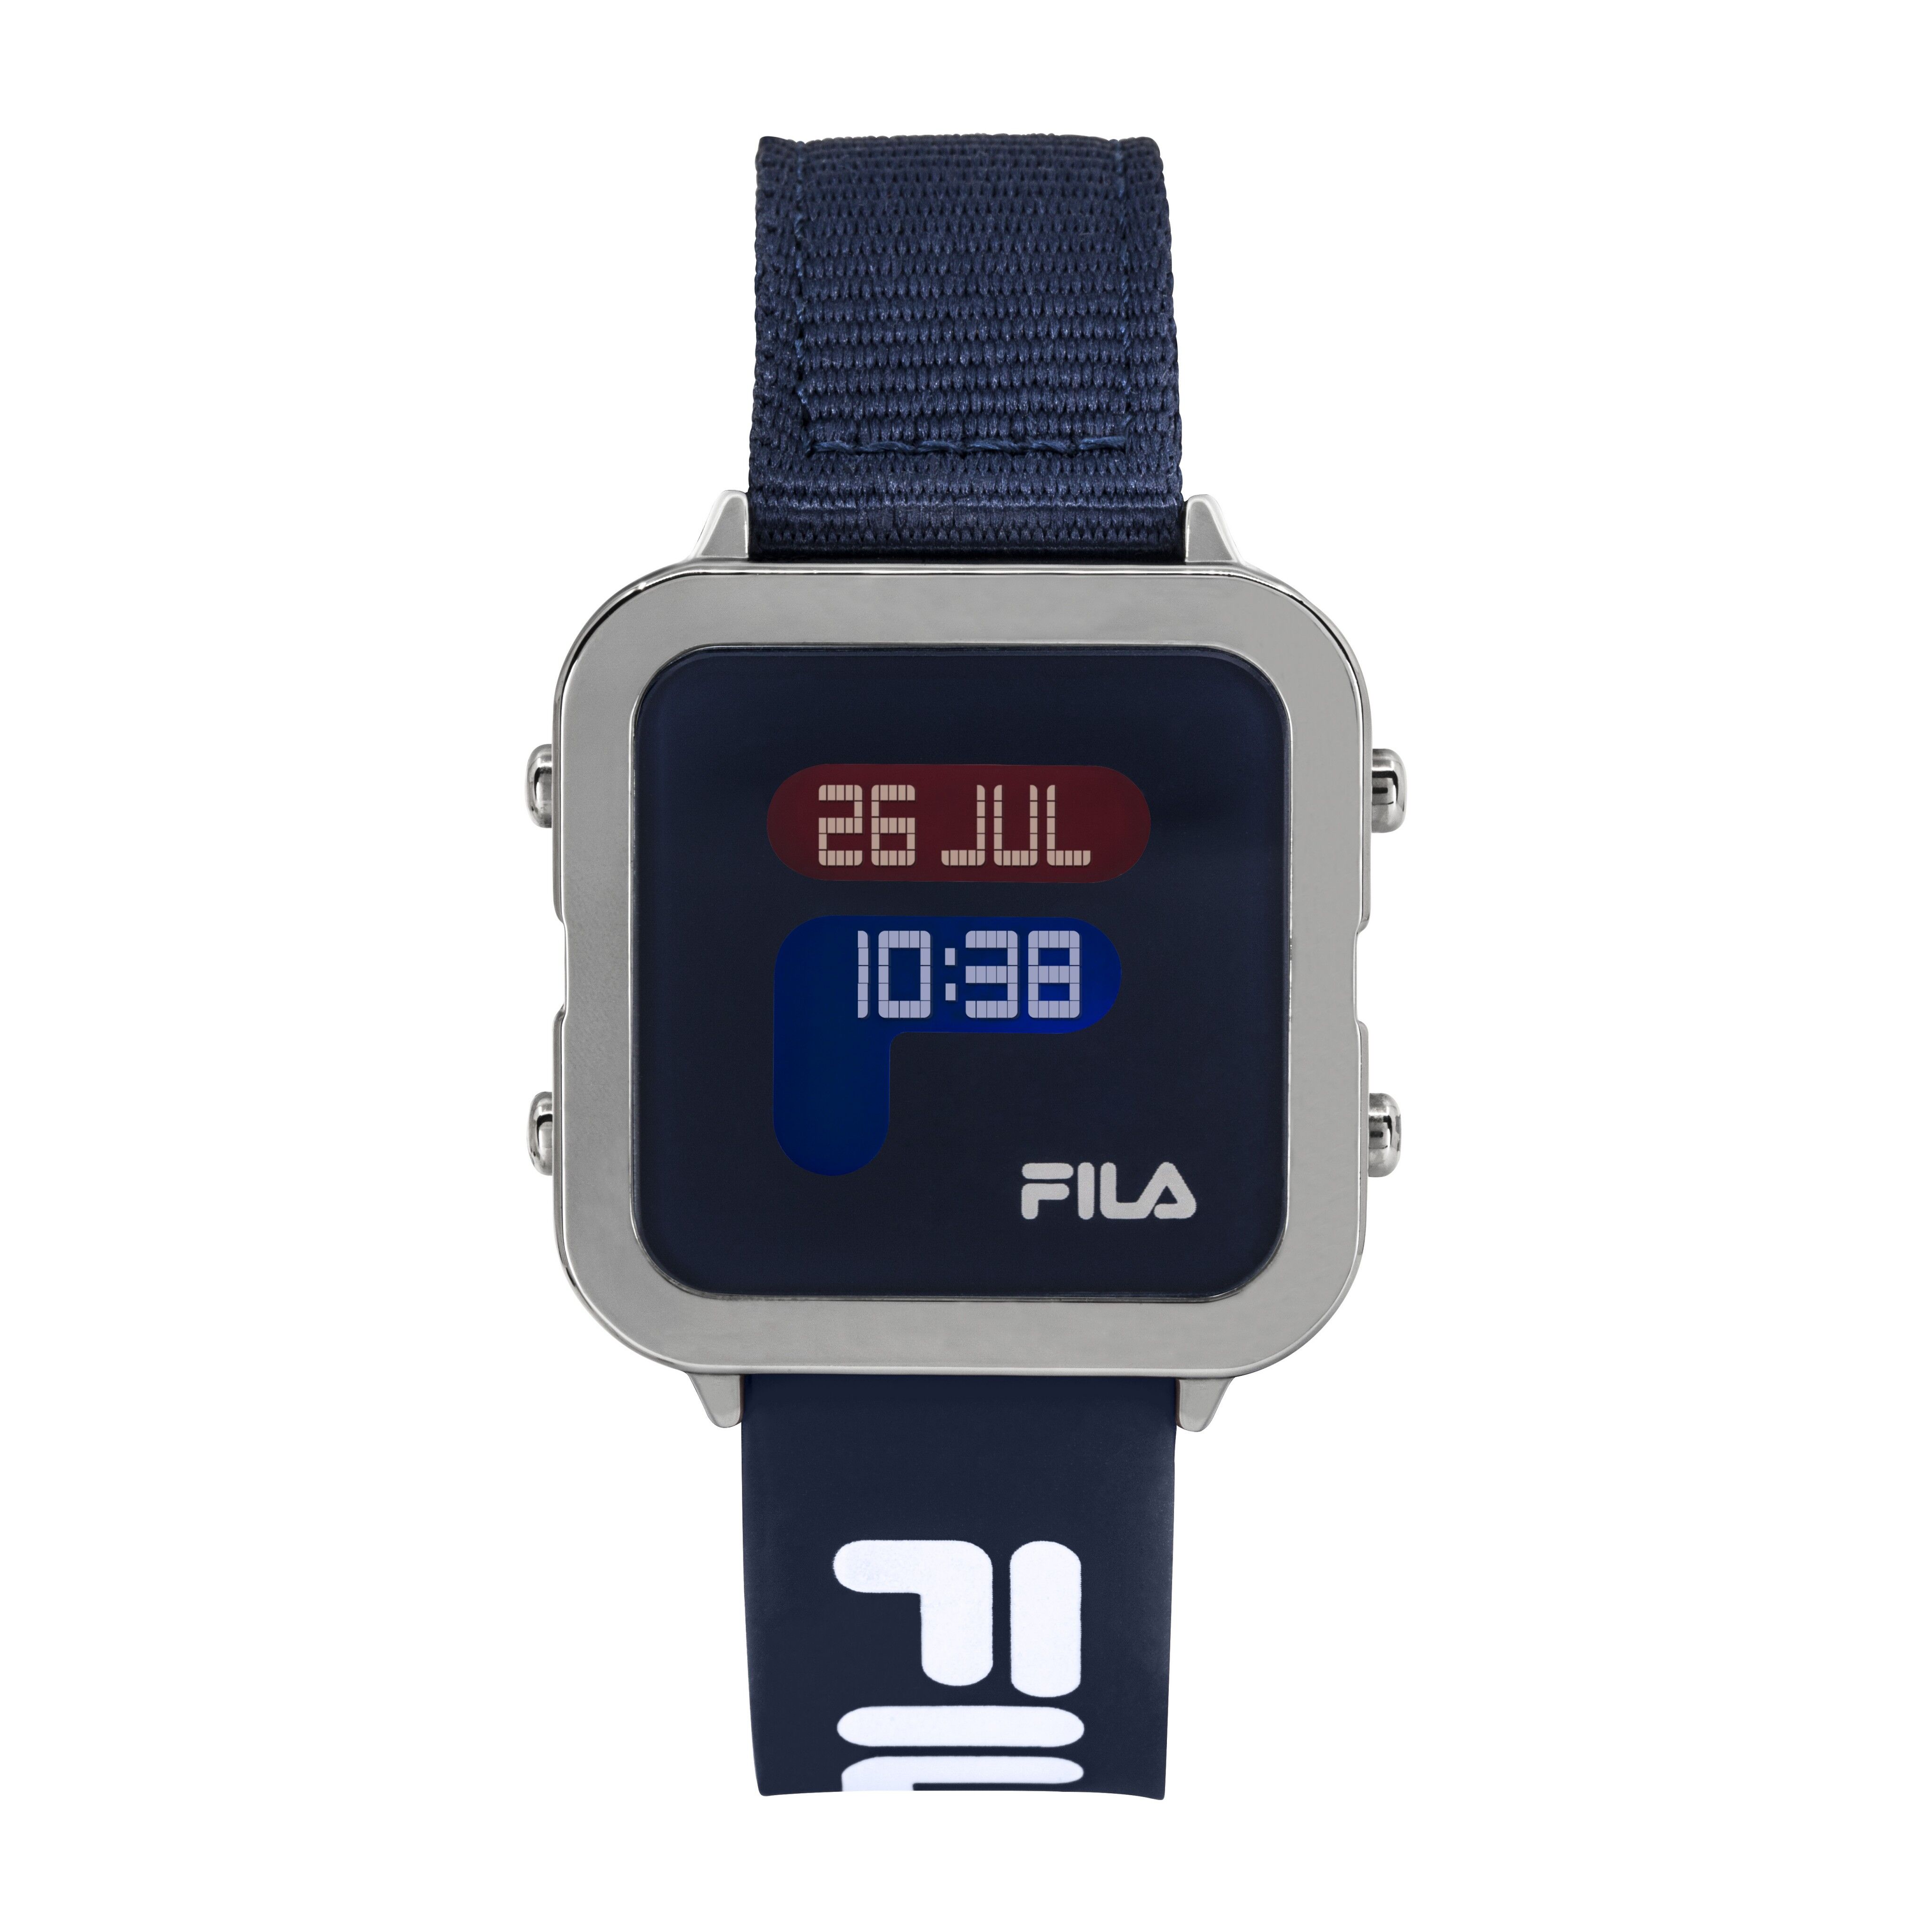 Buyr.com | Wrist Watches | FILA Watch Men - Digital Watches for Men -  Digital Watches for Women - Black Watch - Fila Watches for Men - Digital  Bracelet Watch - Stopwatch Watch - Square Watch (Blue)